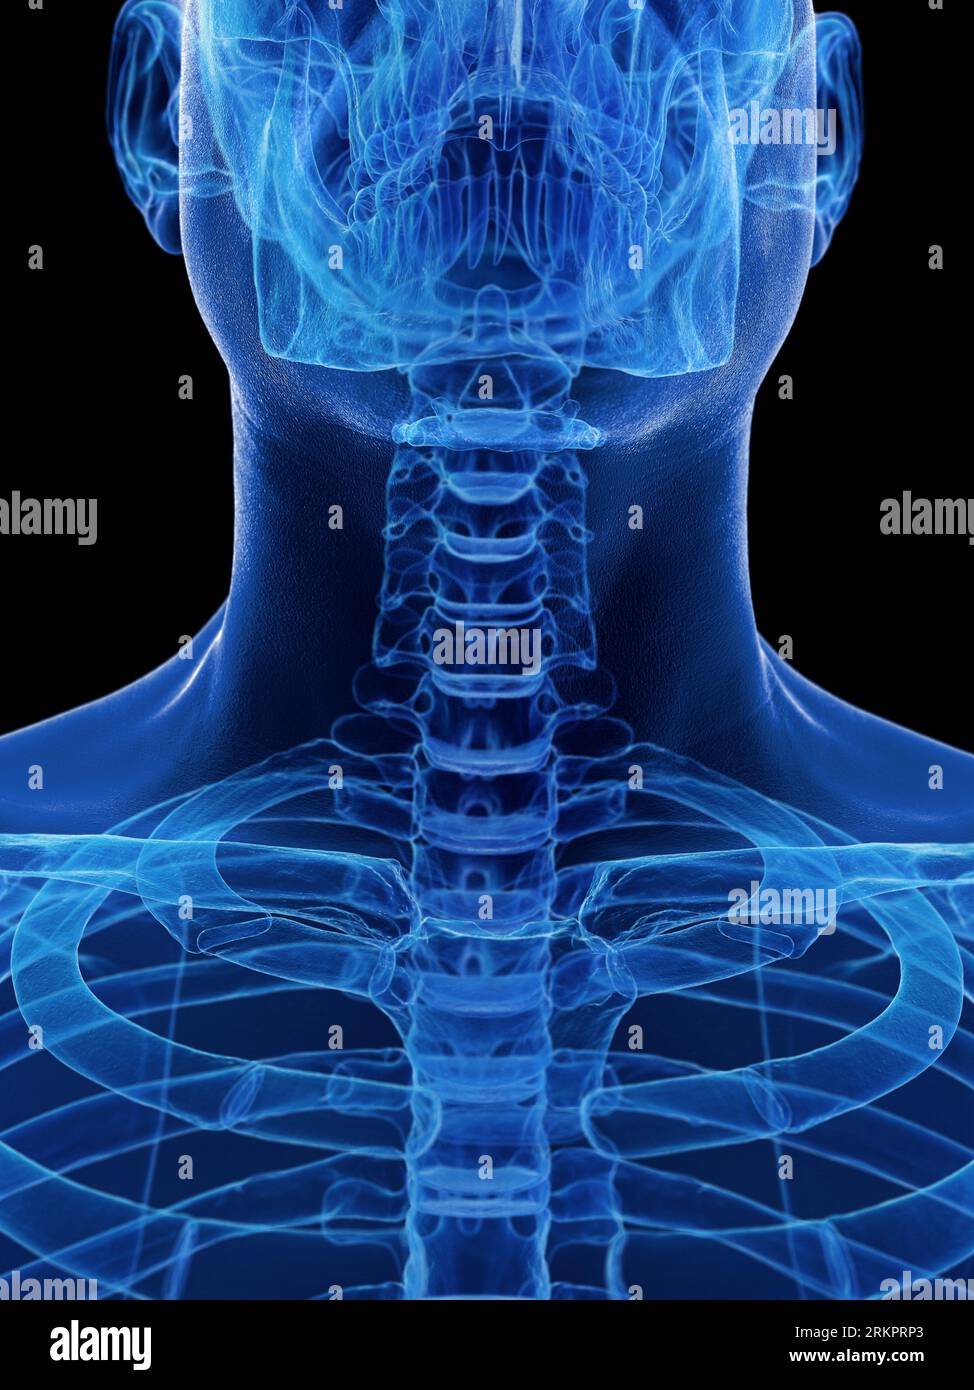 Skeletal system of the neck, illustration. Stock Photo